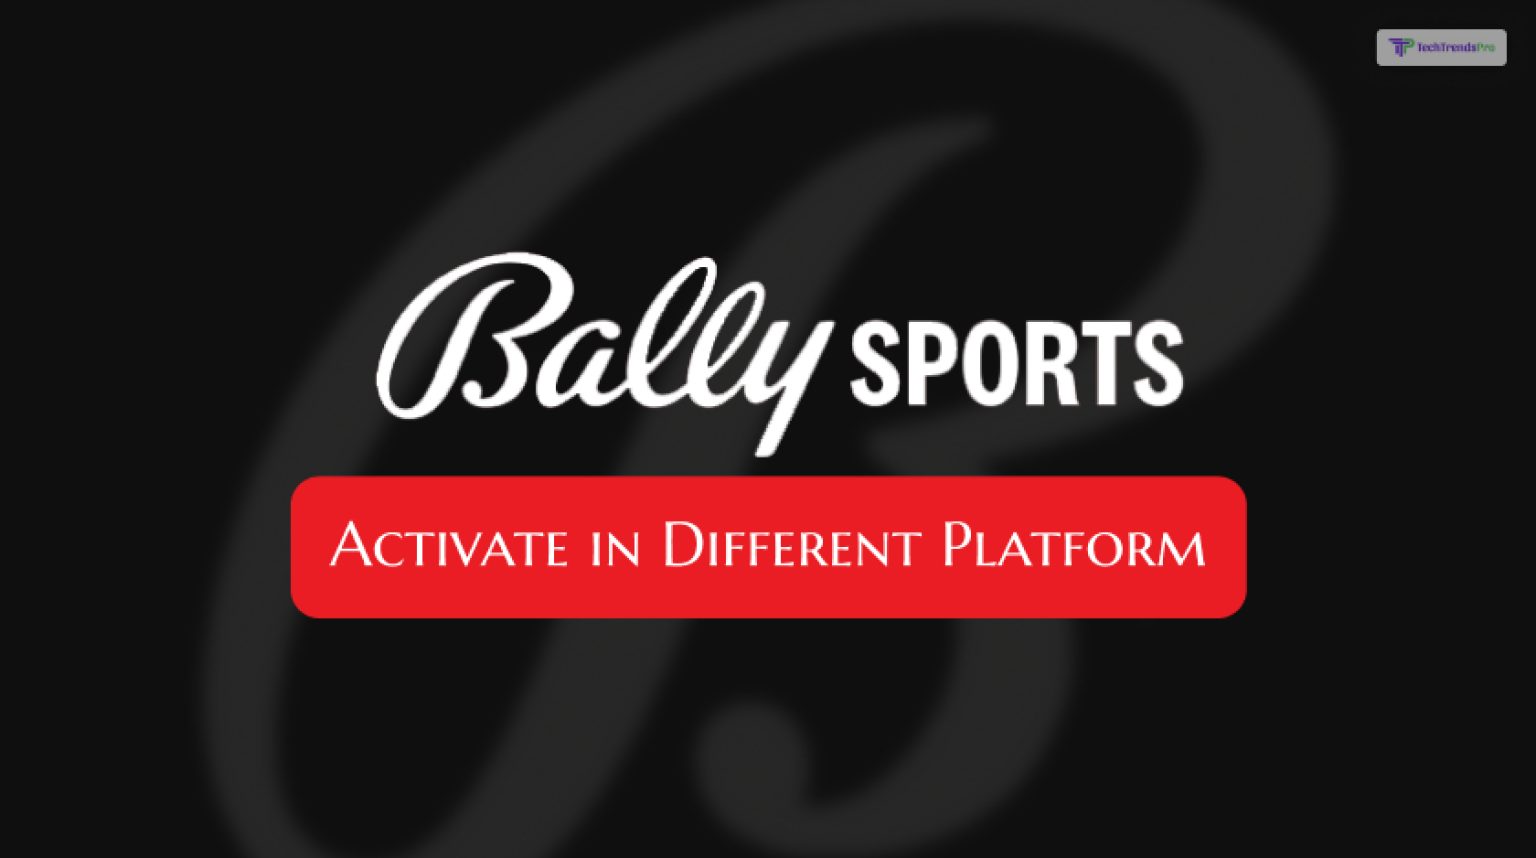 Ballysports.com Activate Process For Apple, Roku, Fire TV